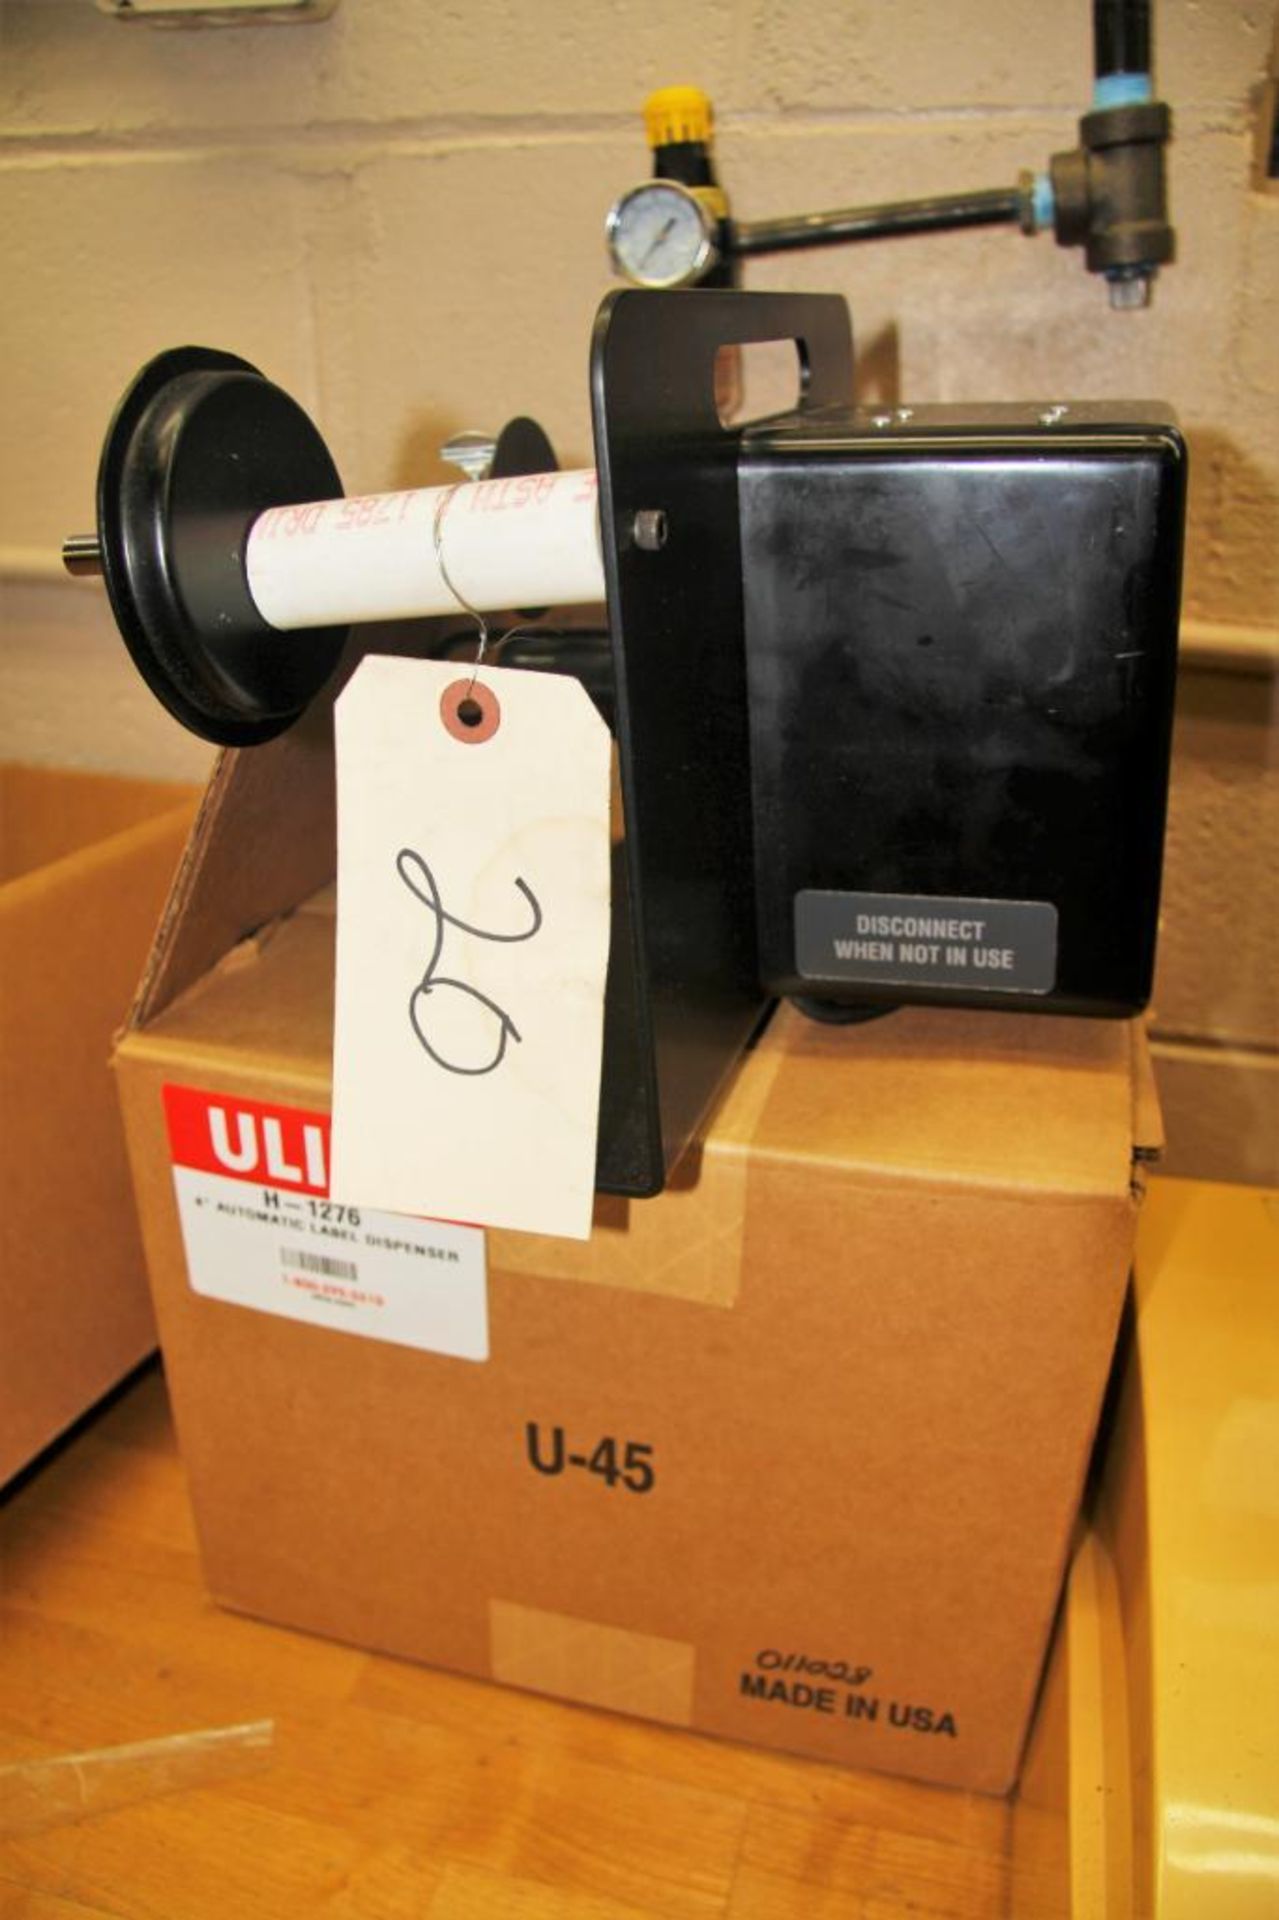 U-Line, H-1266, 4" Automatic Label Dispenser